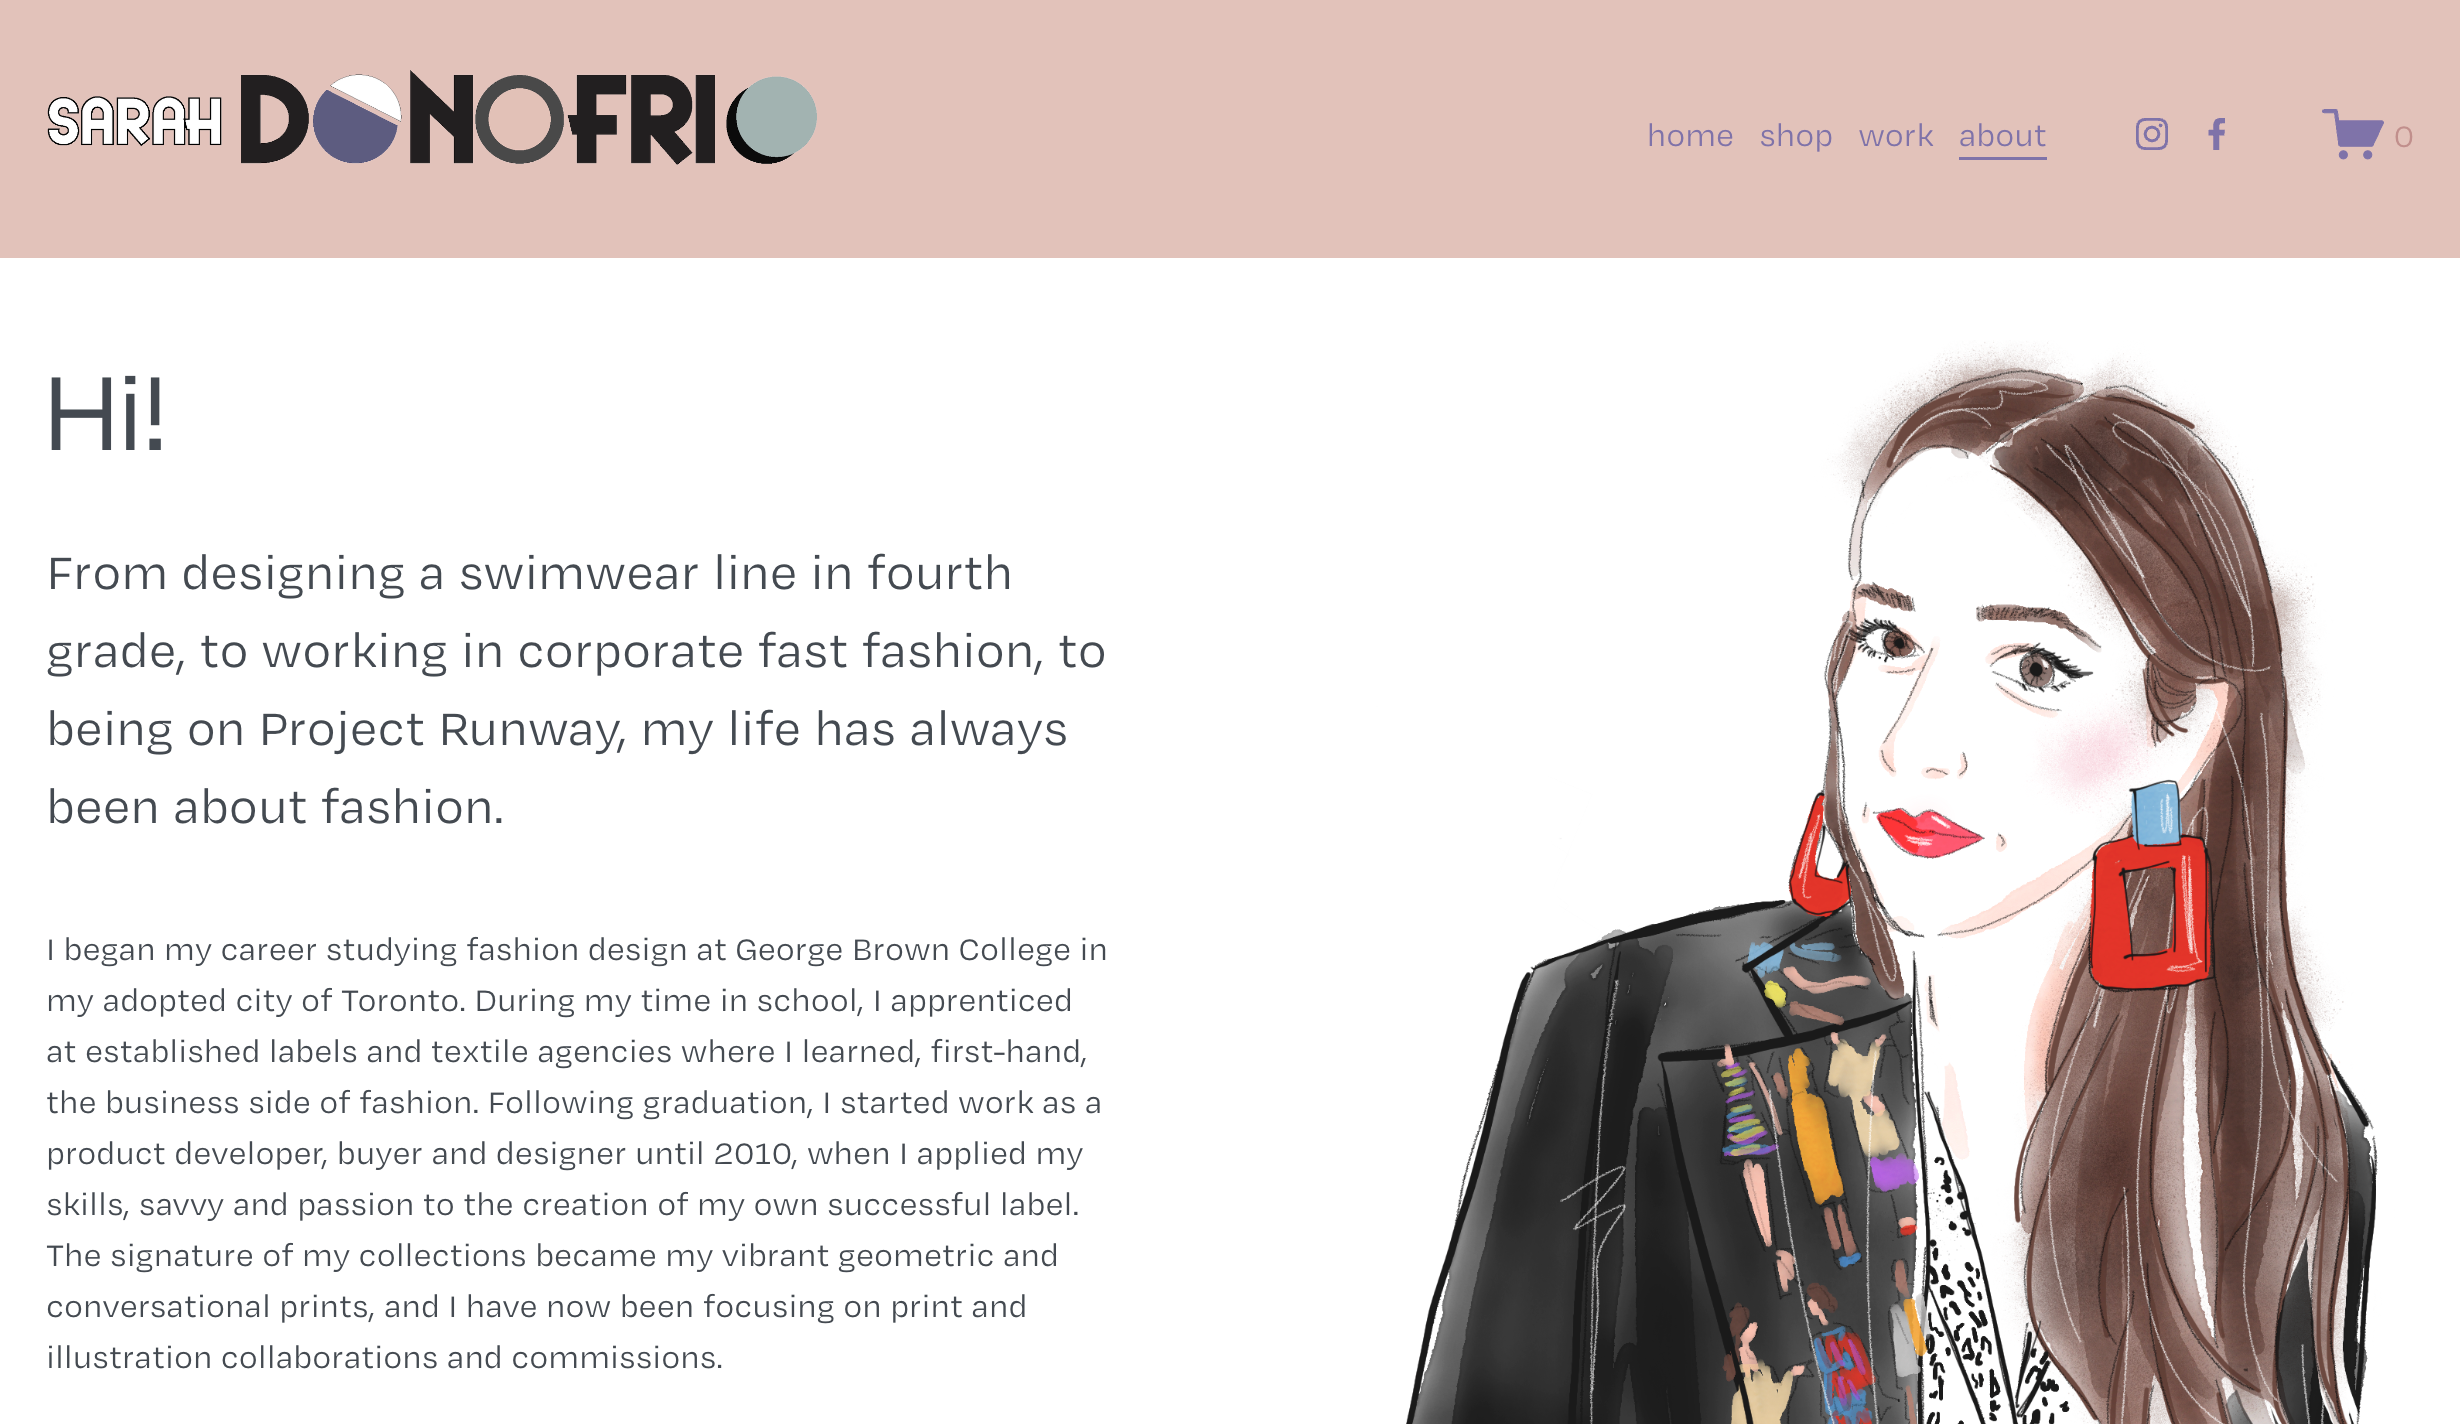 Sarah Donofrio's brand story on the designer's website